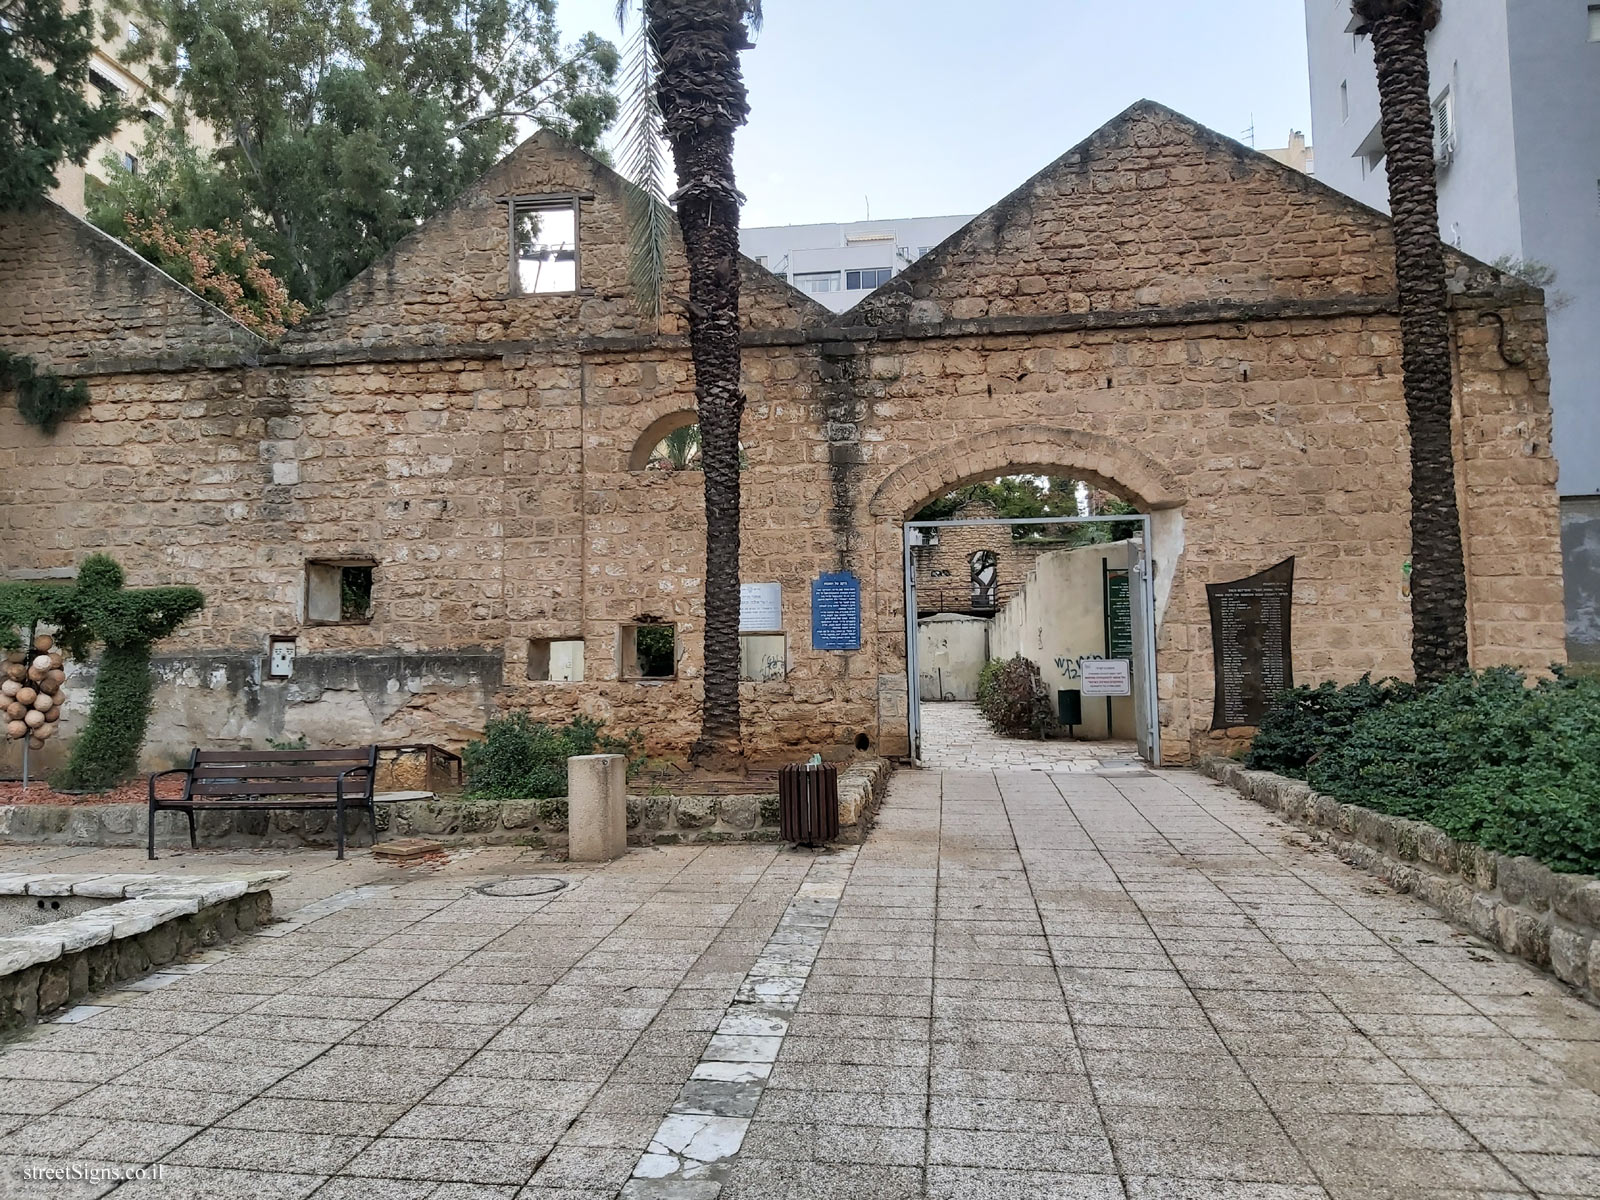 Rehovot - Heritage Sites in Israel - Rehovot Winery - Ha-Nasi ha-Rishon St 38, Rehovot, Israel